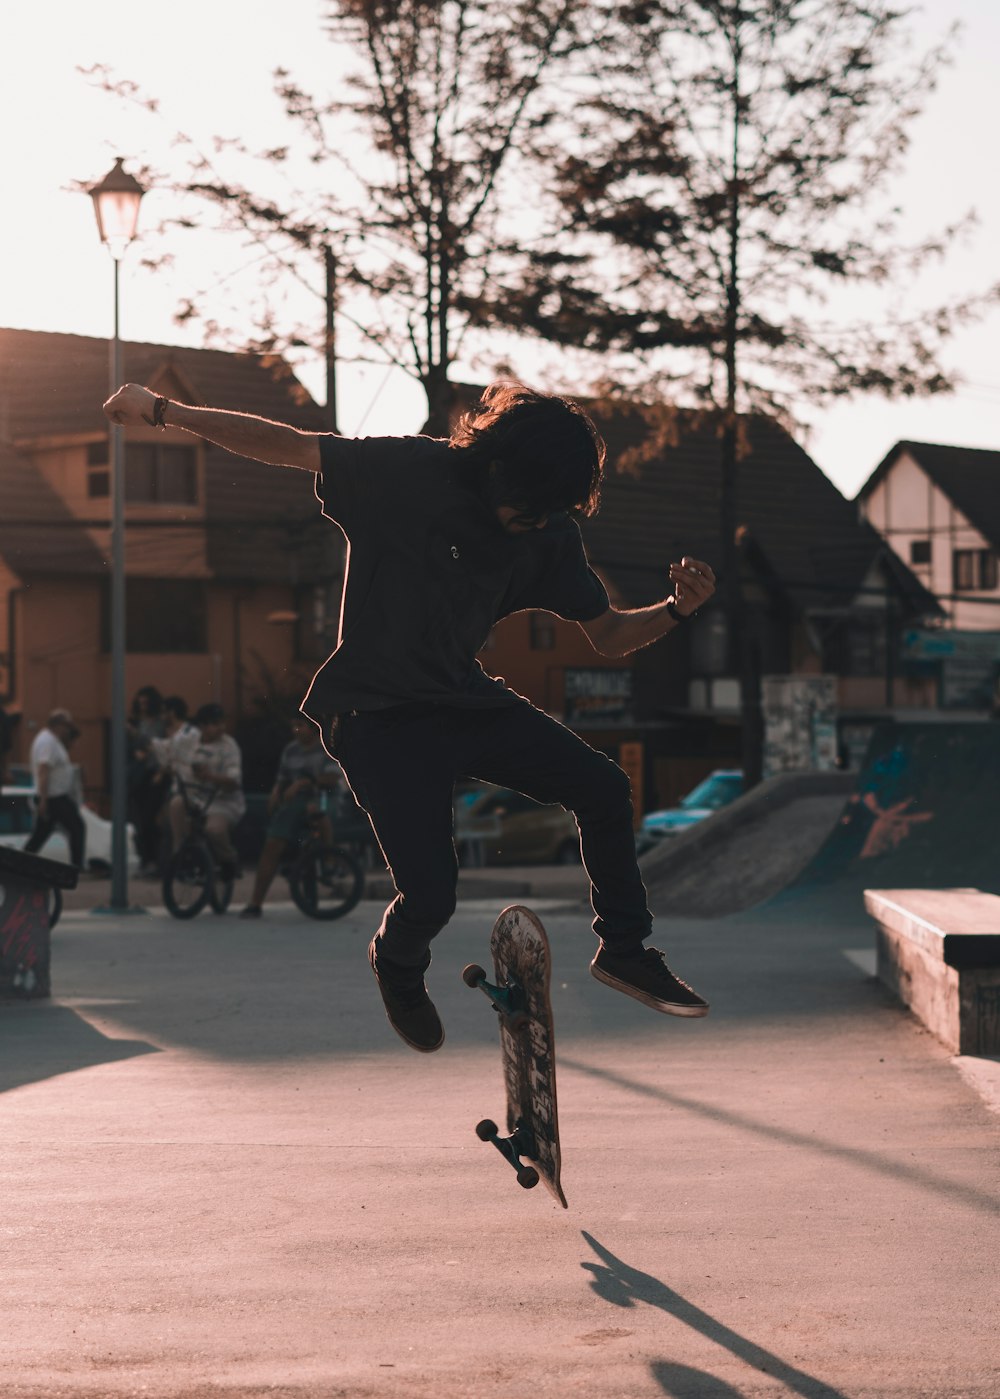 man doing skateboard trick